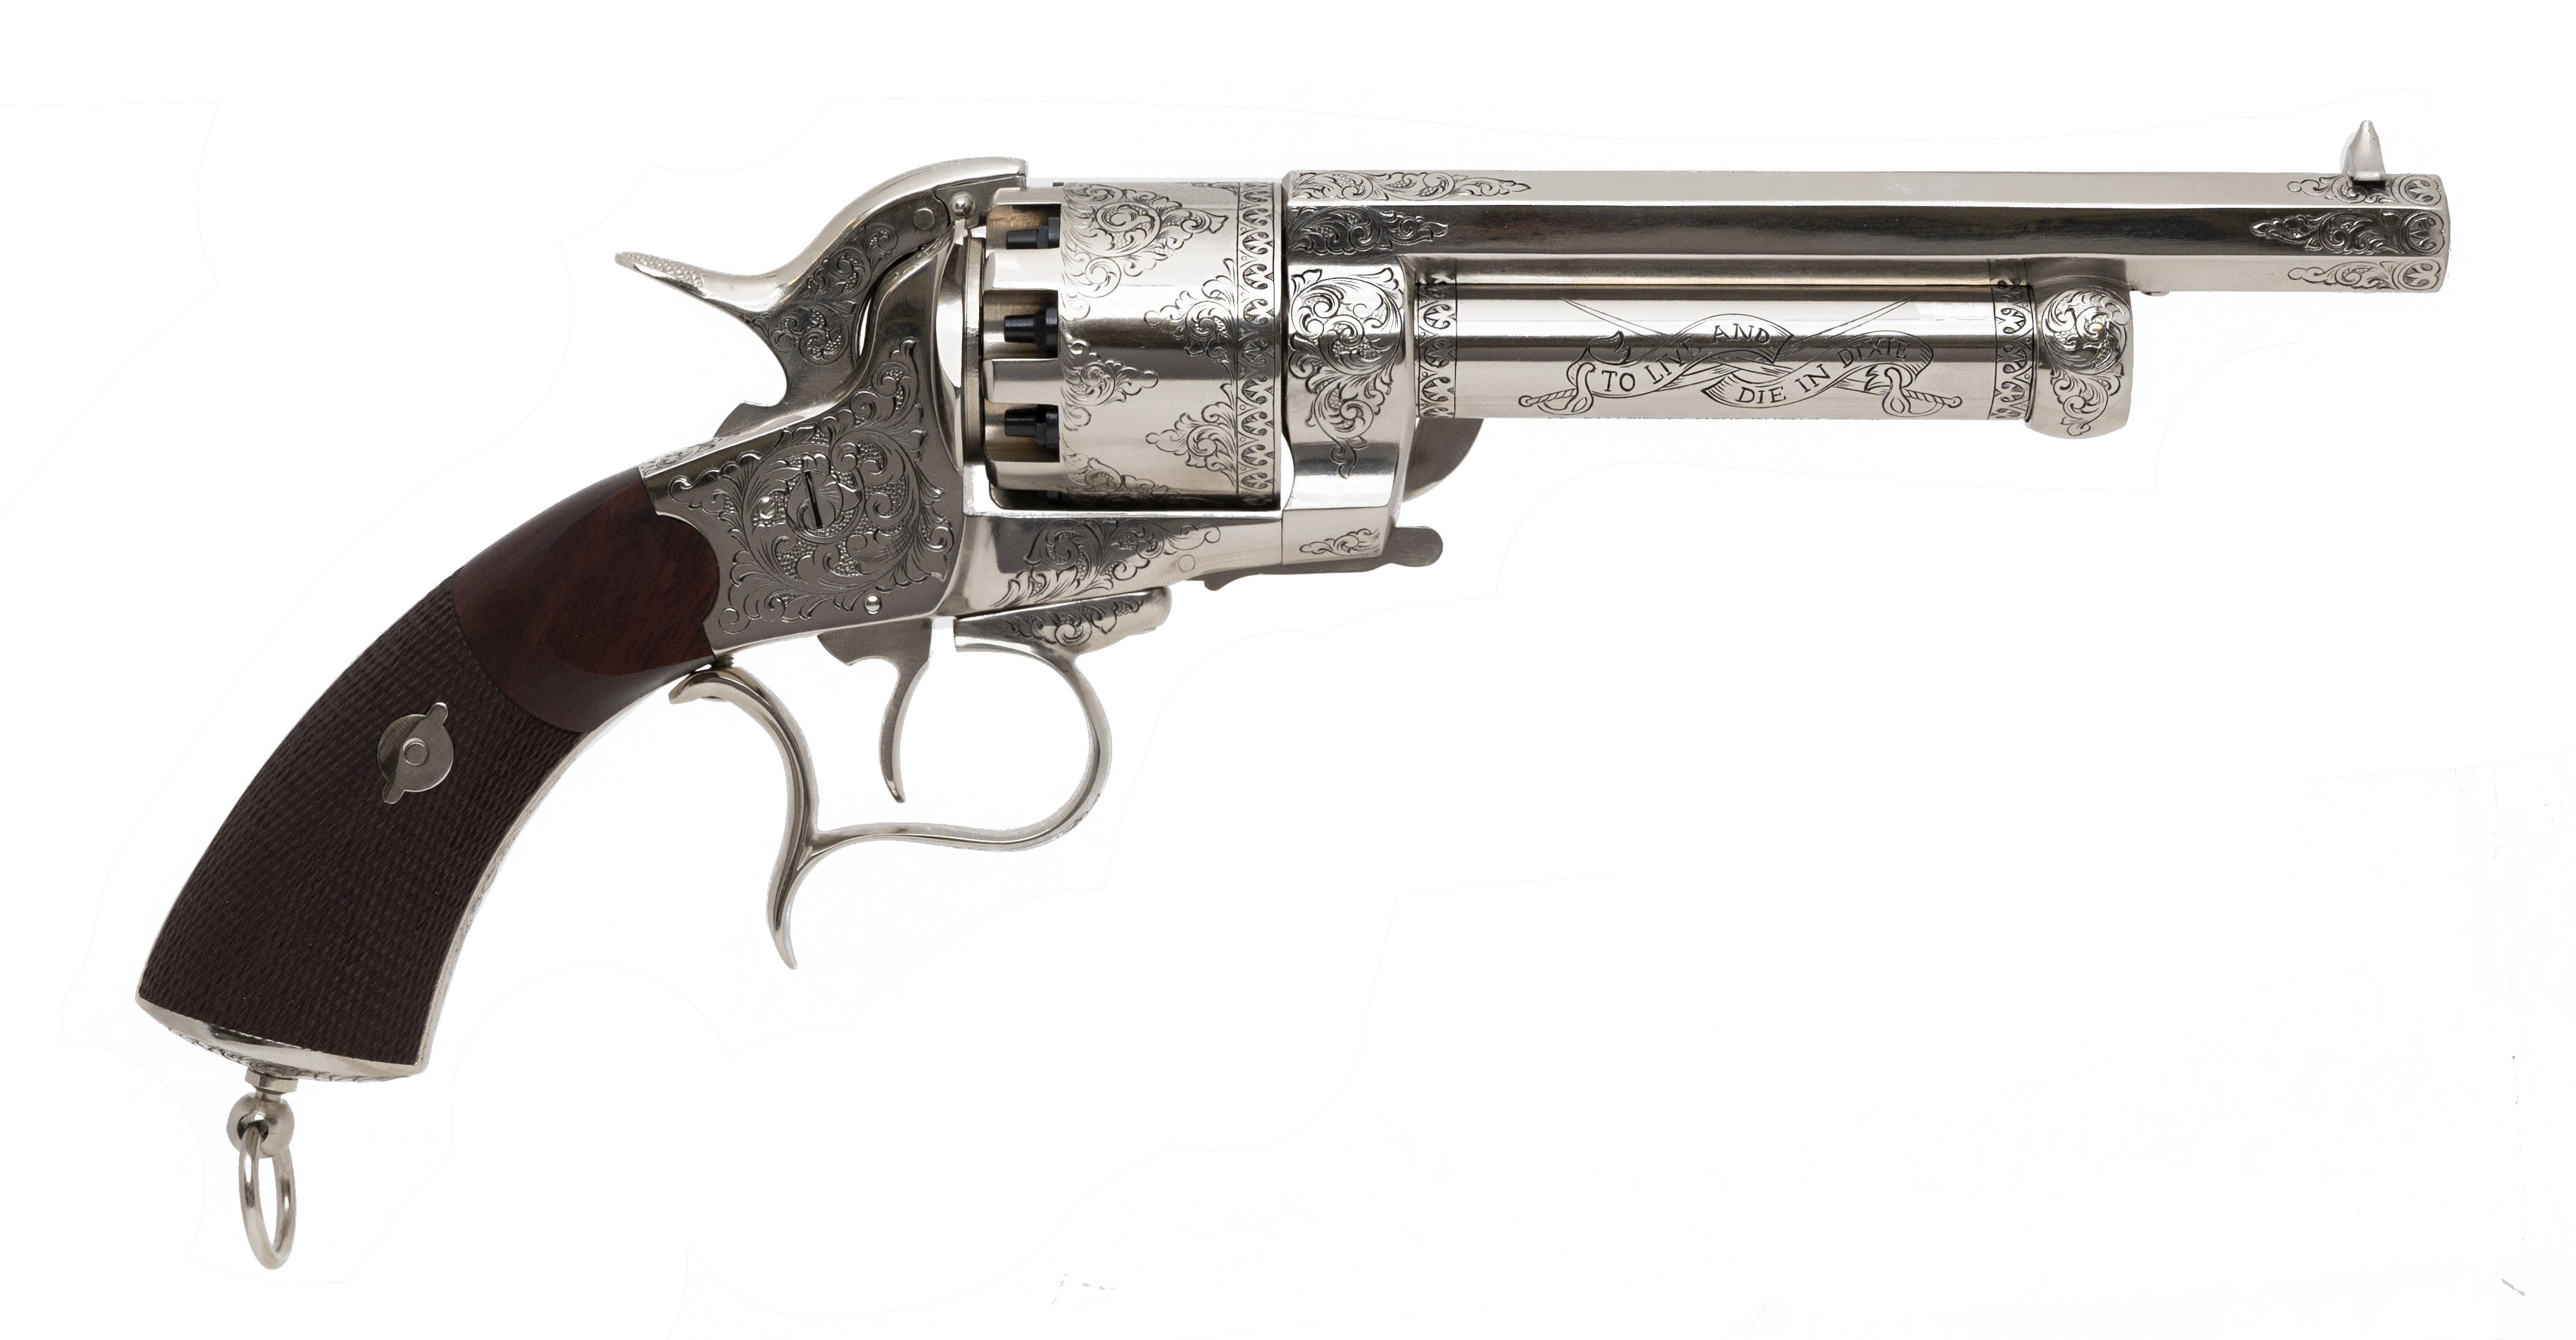 Civil War Commemorative Le Mat revolver for sale.